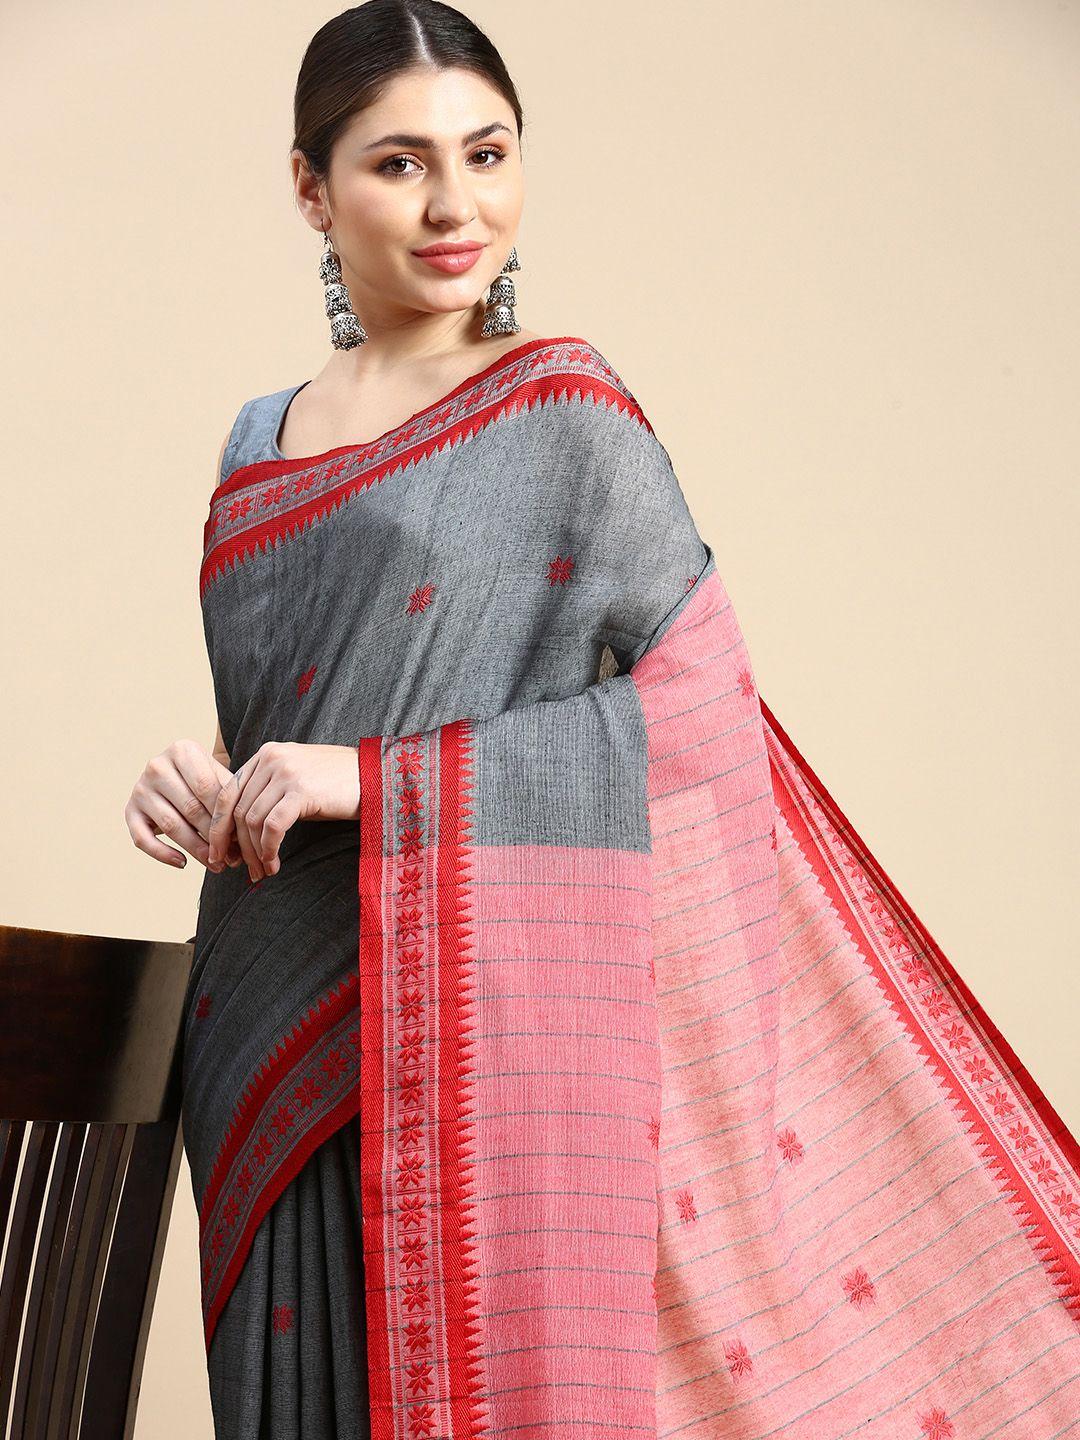 desh bidesh woven design ethnic motifs pure cotton taant saree